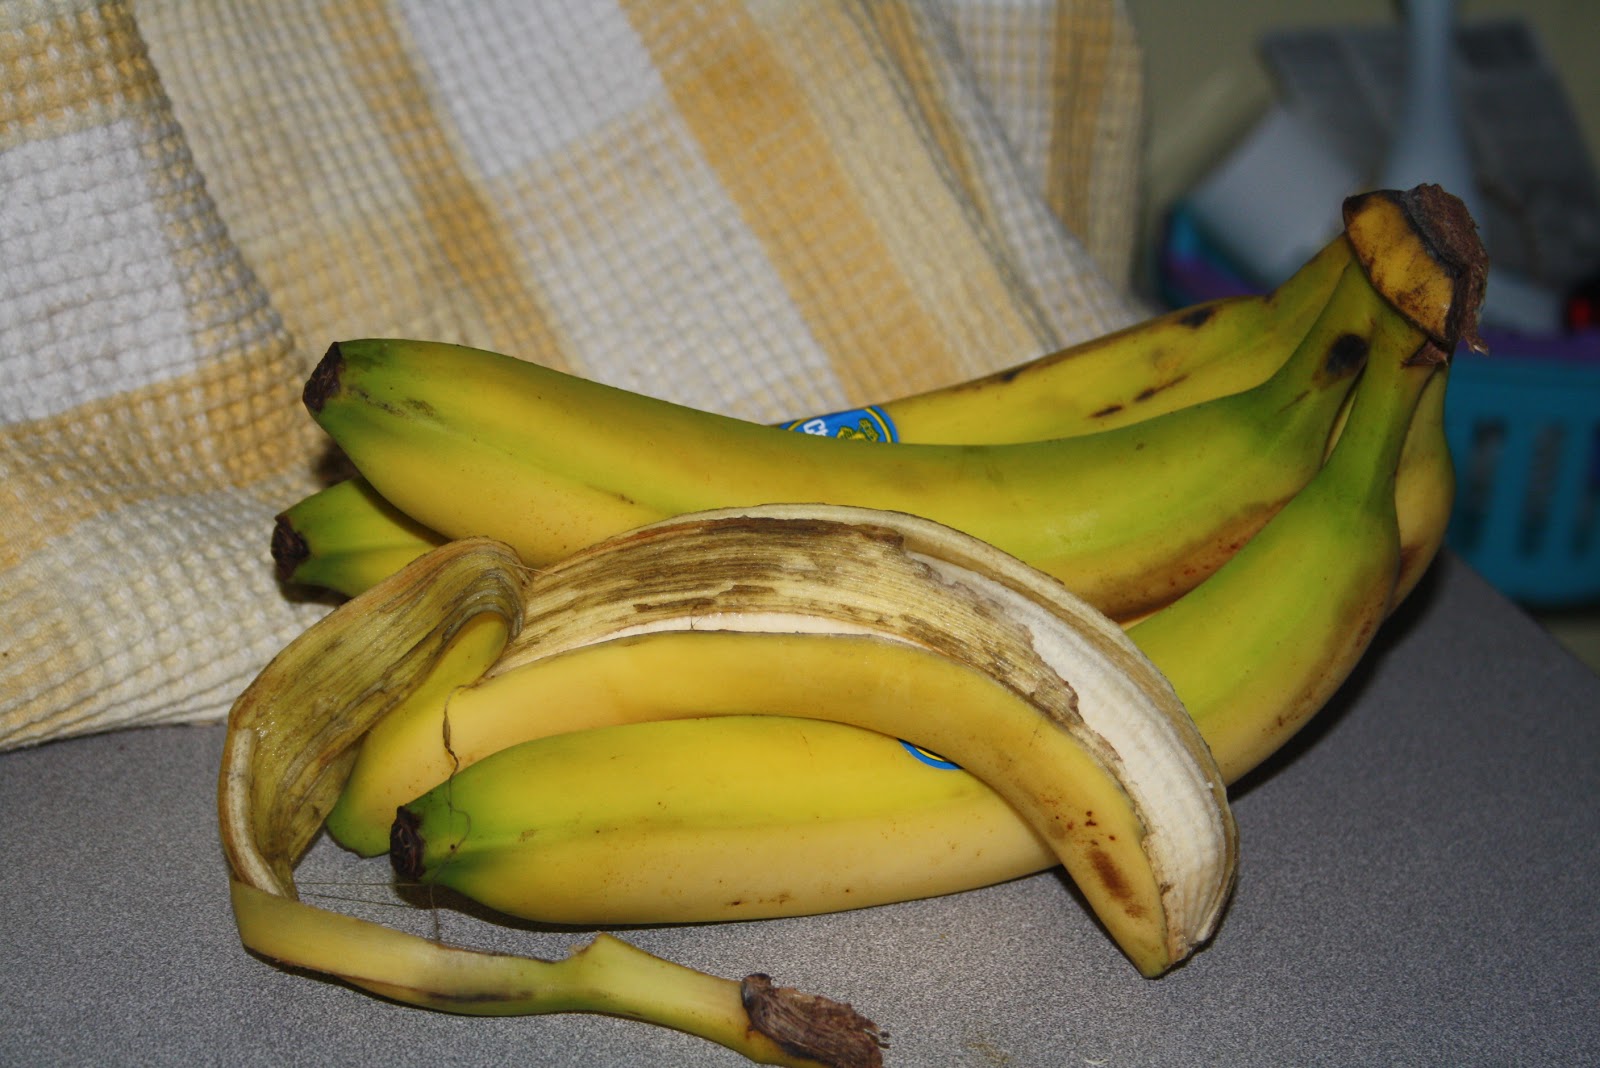 Ел кожуру бананов. Банановая кожура. Банан без кожуры. Деревья банановая кожура.